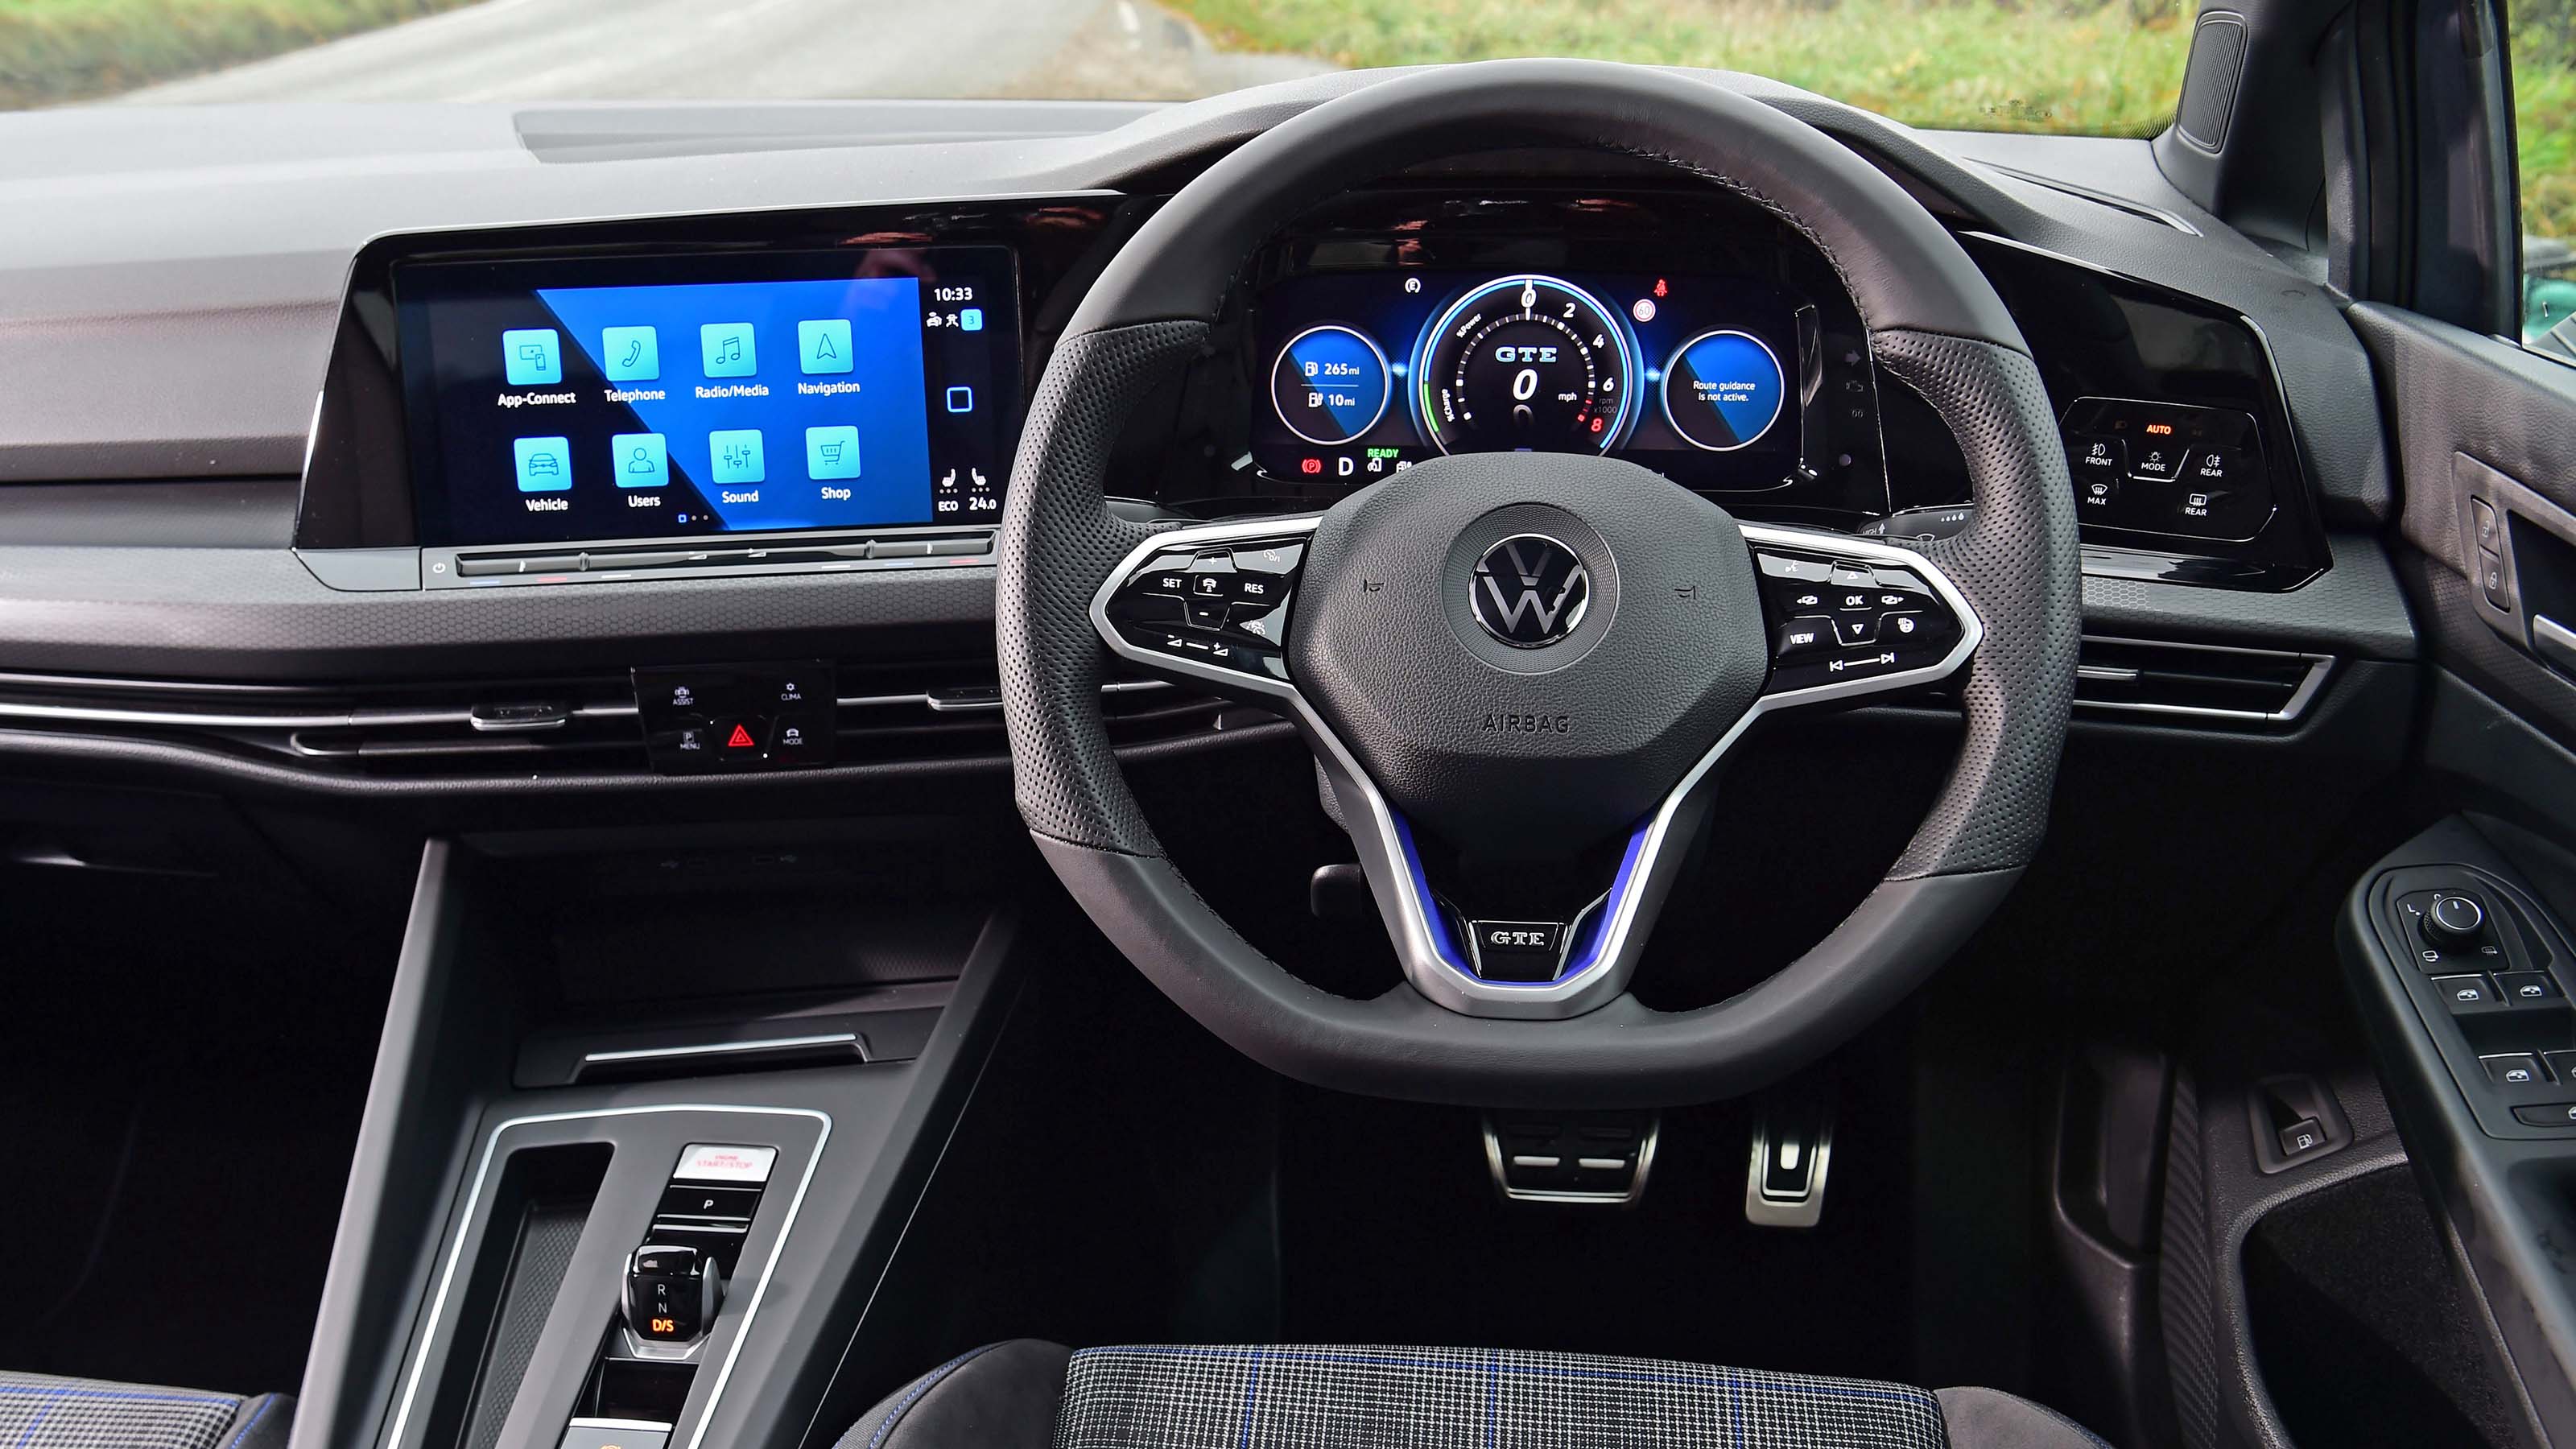 2021 Volkswagen Golf GTI Interior Cabin - VW - YouTube